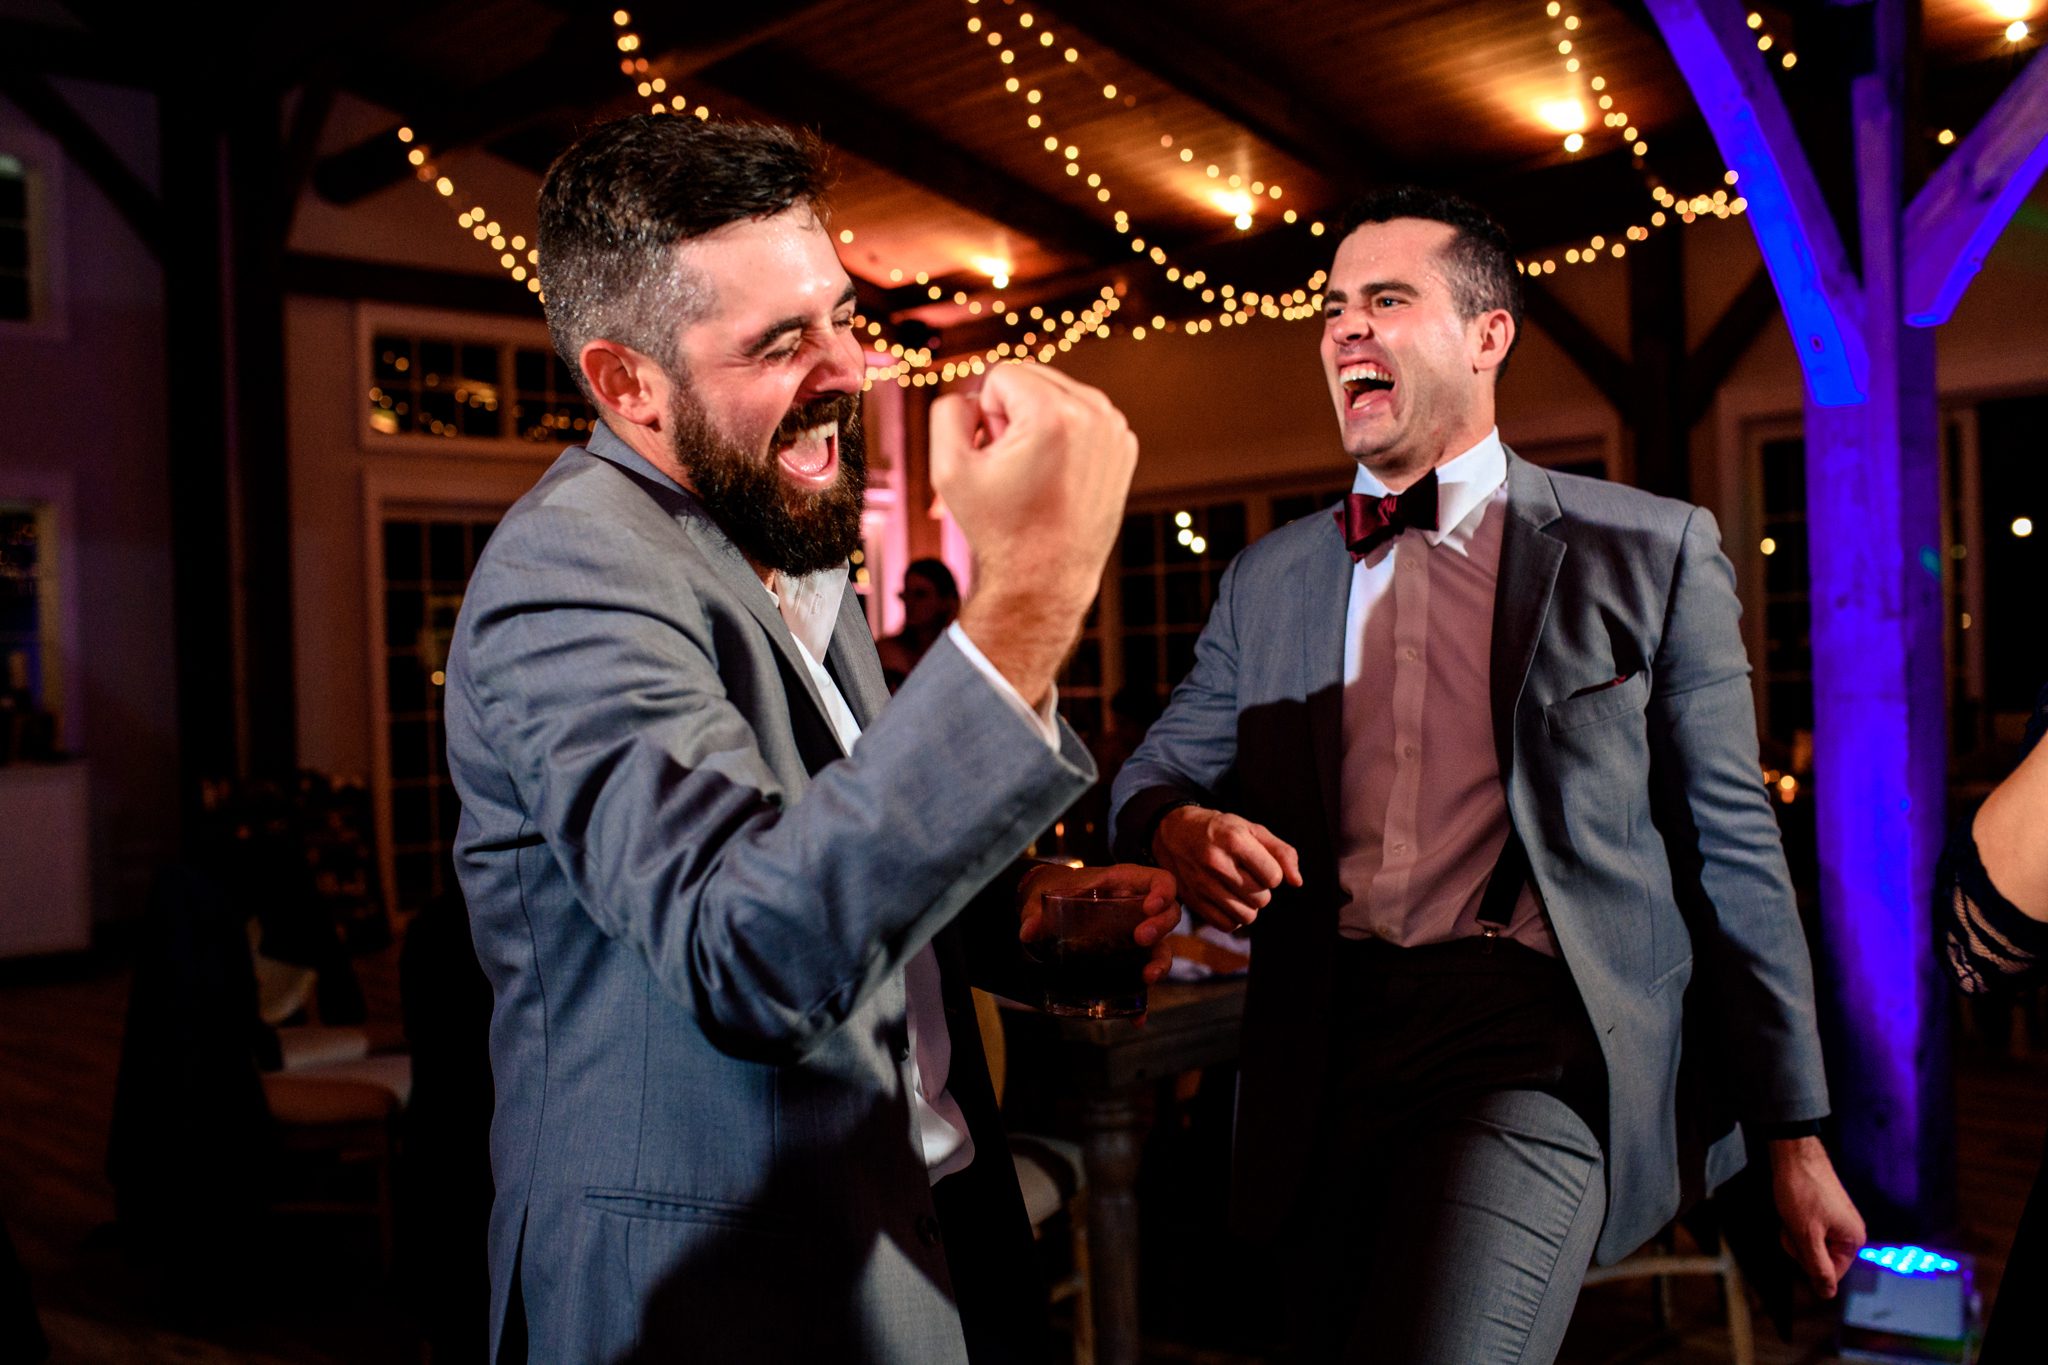 2 groomsmen dancing together